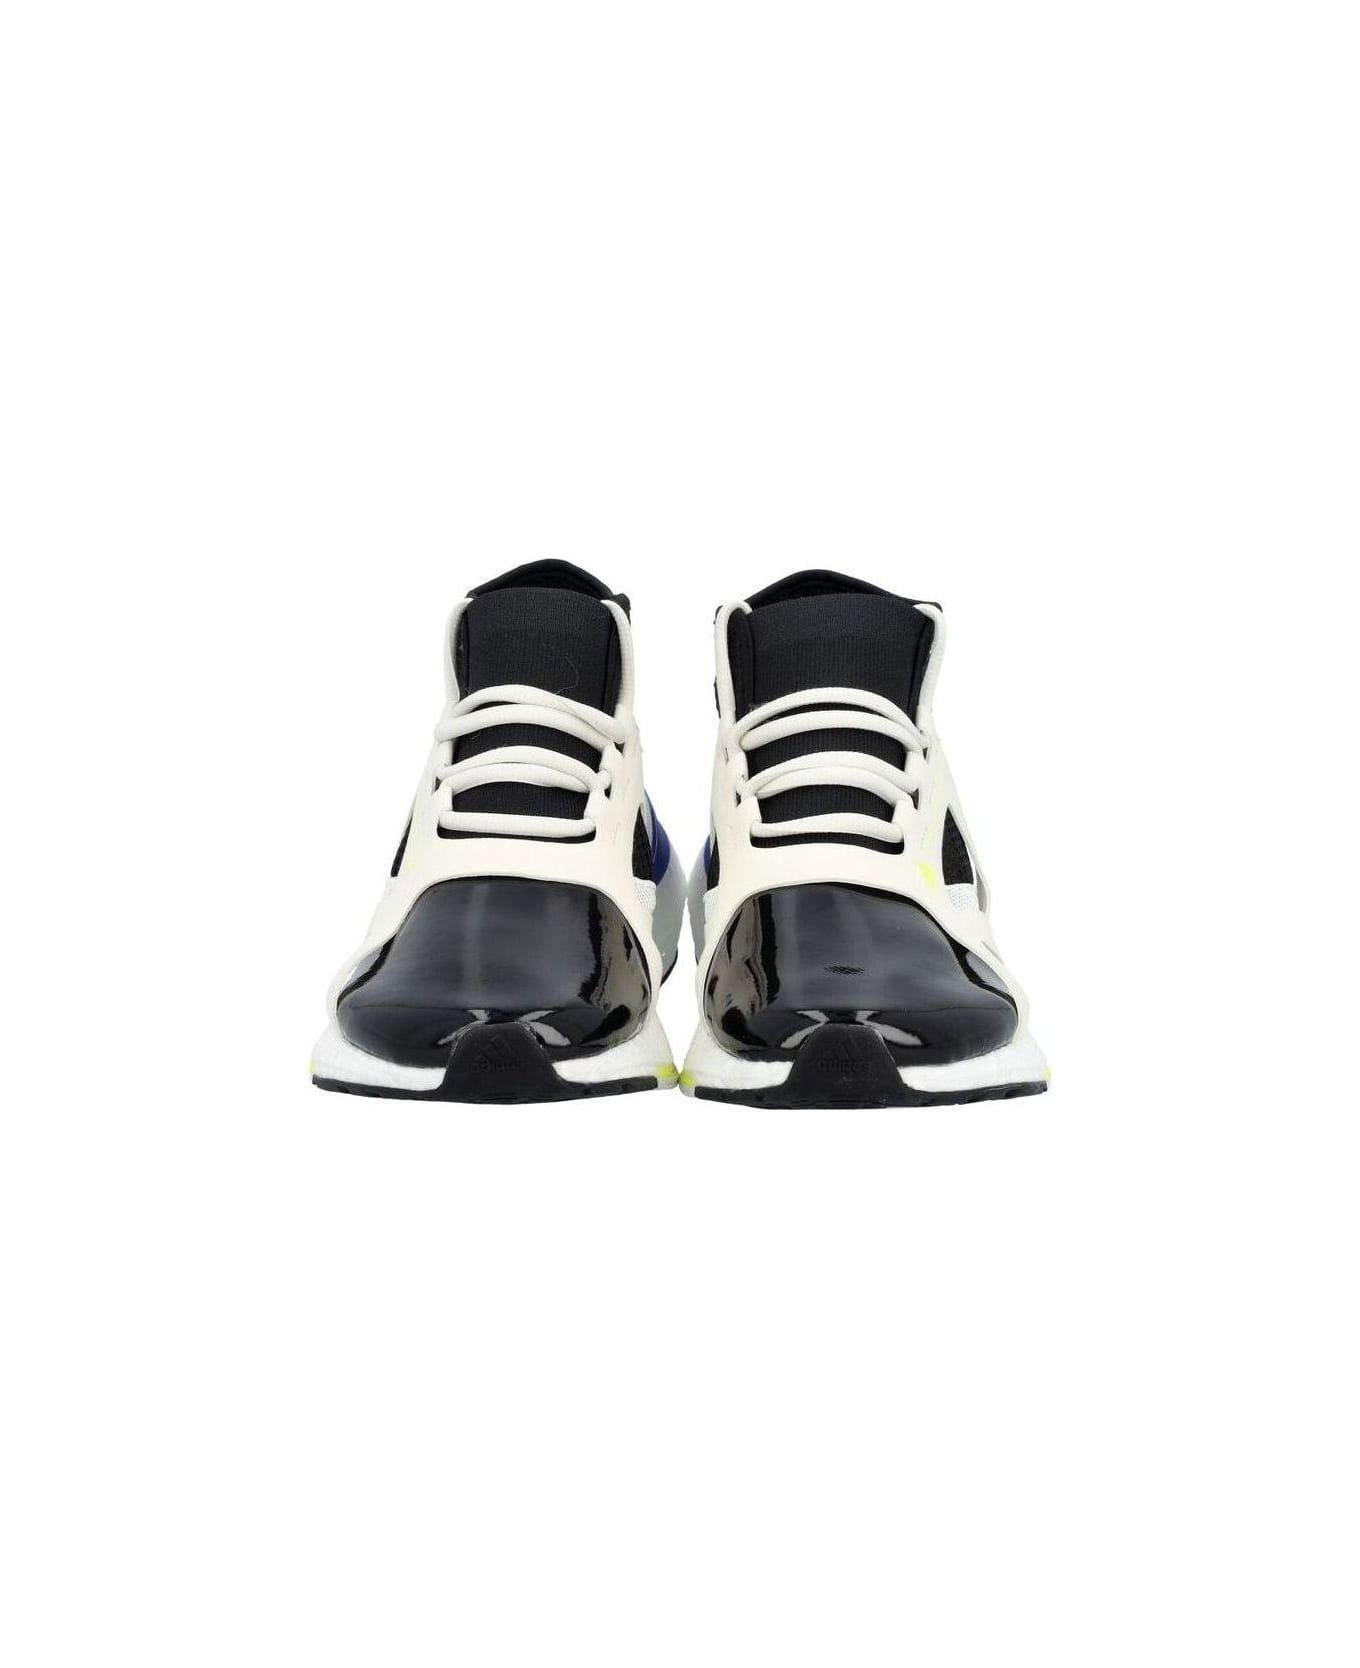 Adidas by Stella McCartney Ultraboost 21 Sneakers - Multiple colors